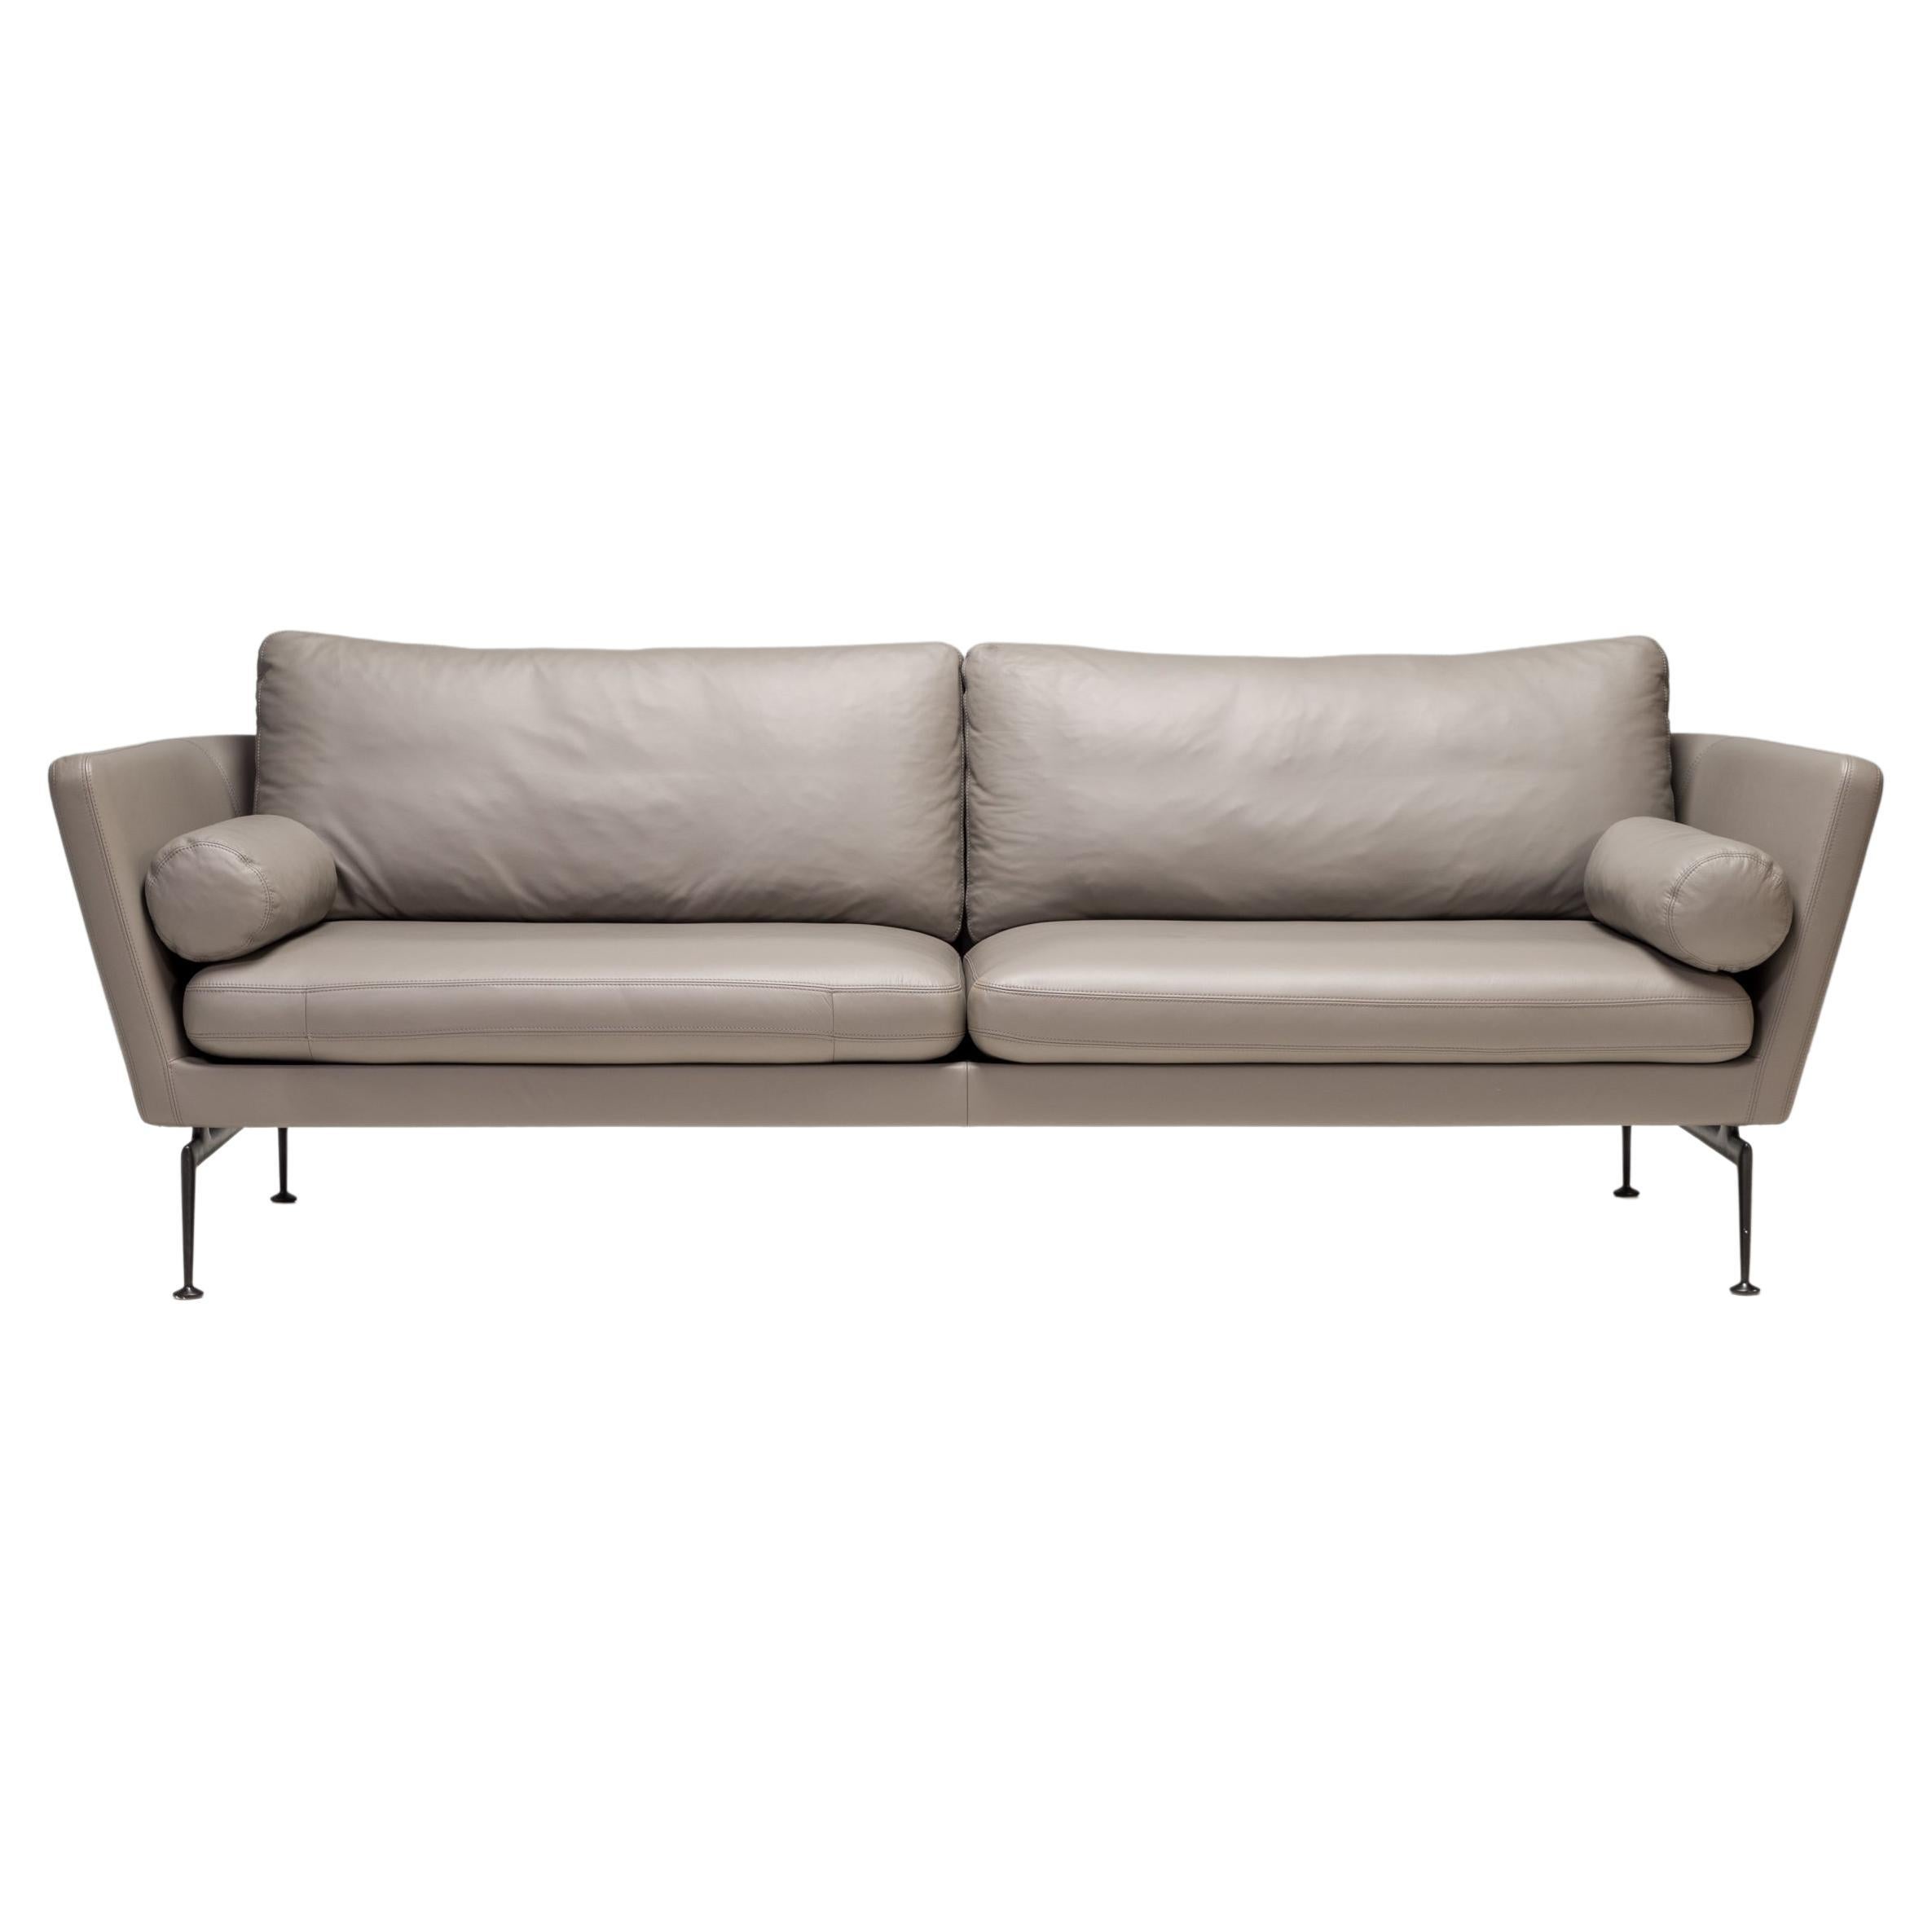 Antonio Citterio für Vitra, dreisitziges Suita-Sofa aus grauem Leder, 2021 im Angebot